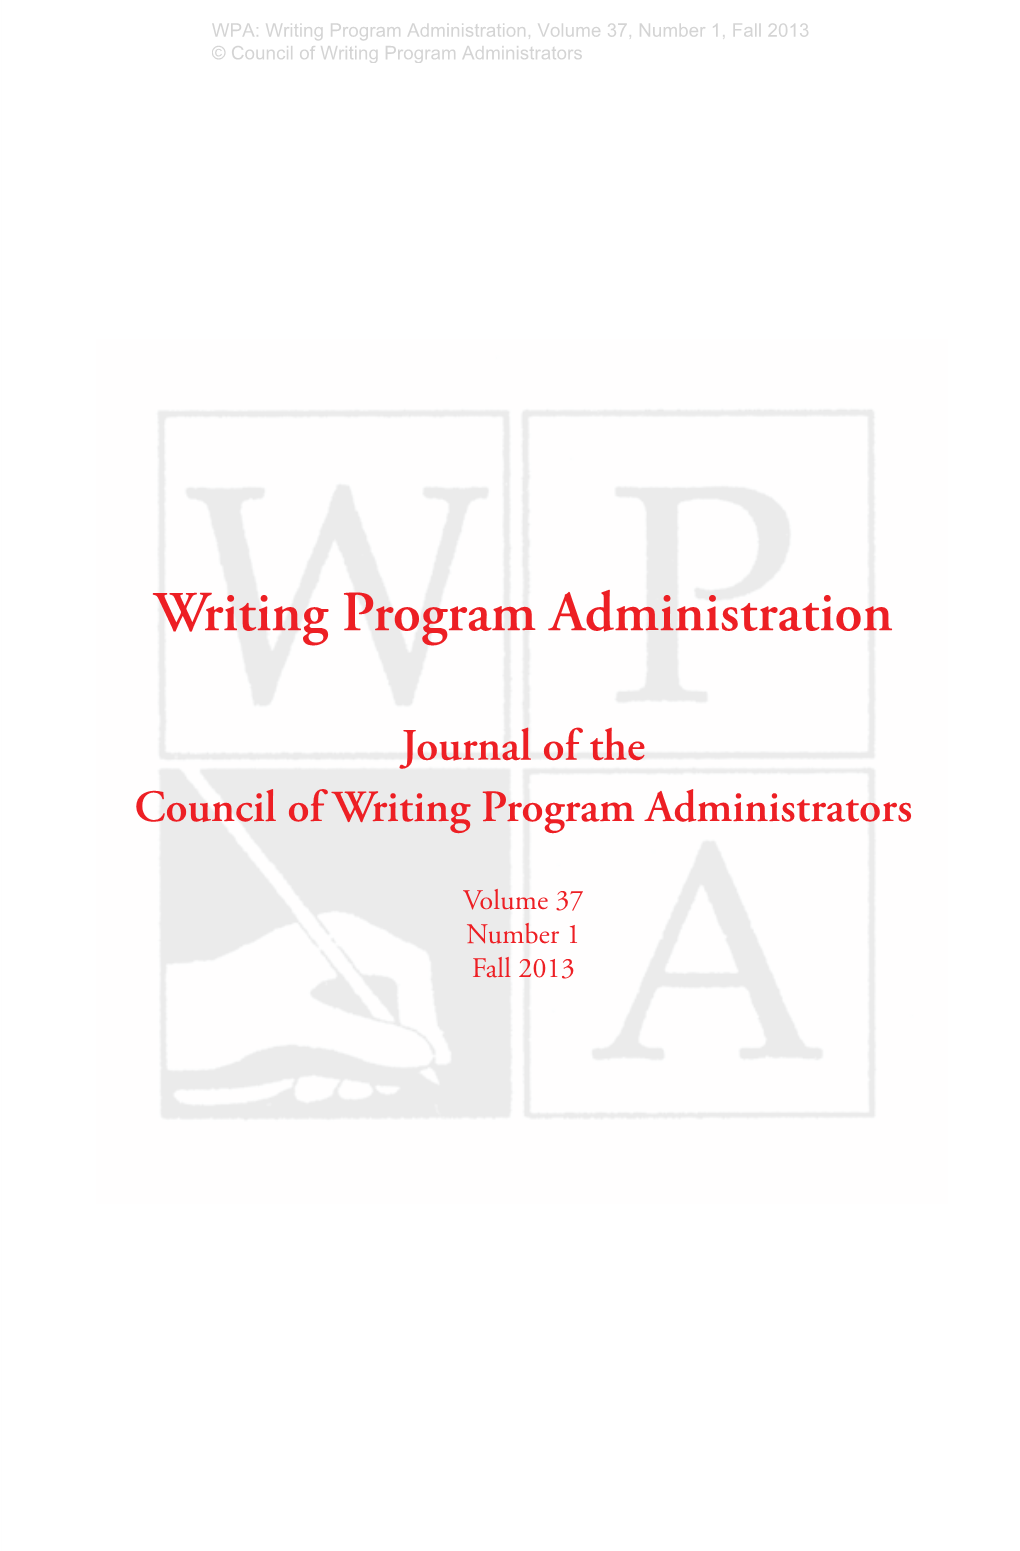 WPA: Writing Program Administration 37.1 (Fall 2013)